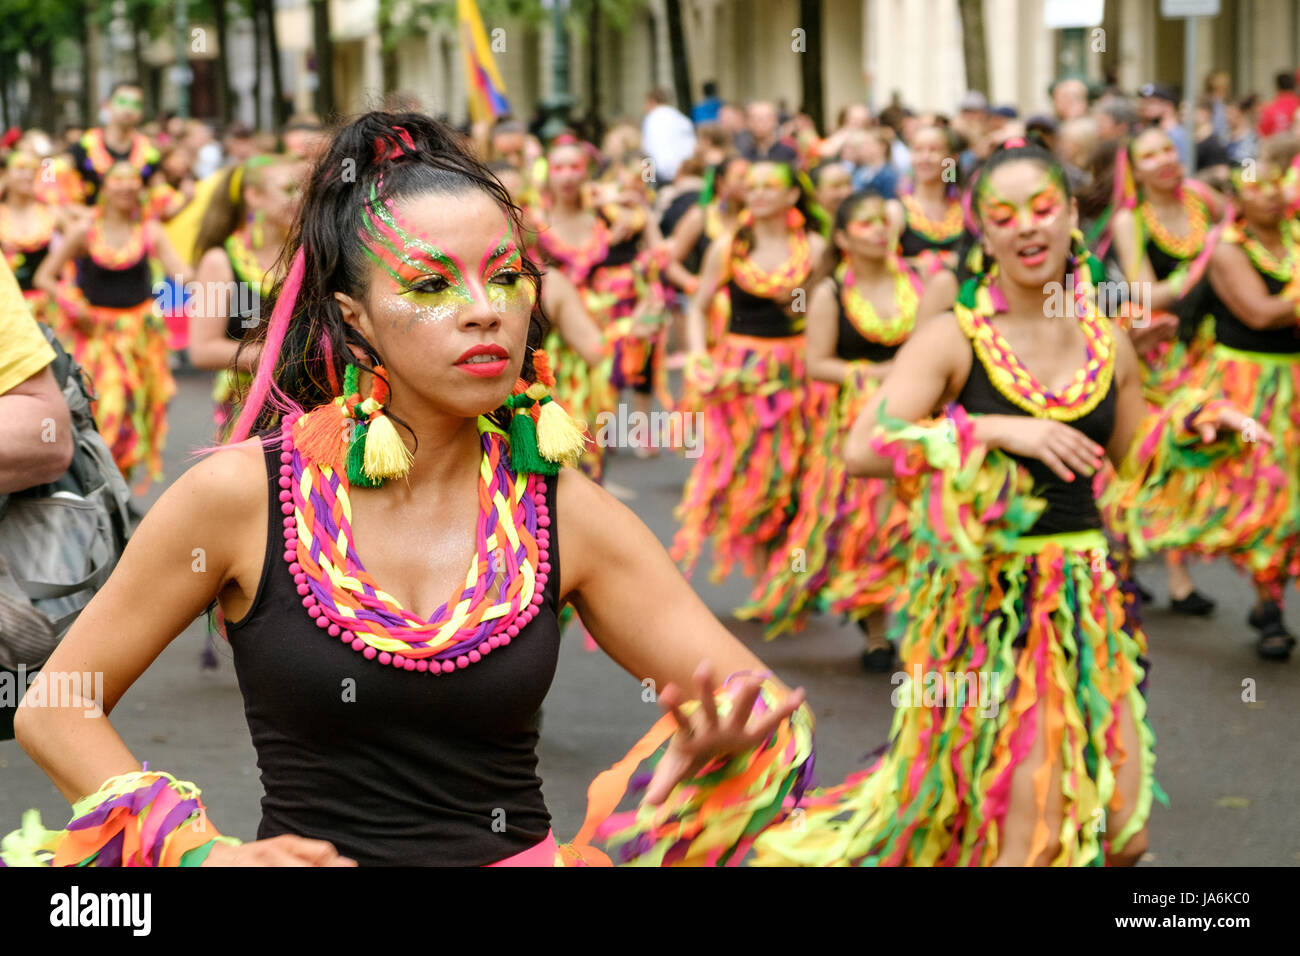 Berlin, Germany - june 04, 2017: People in costumes celebrating on Karneval der Kulturen ( Carnival of Cultures) in Berlin, Germany. Stock Photo